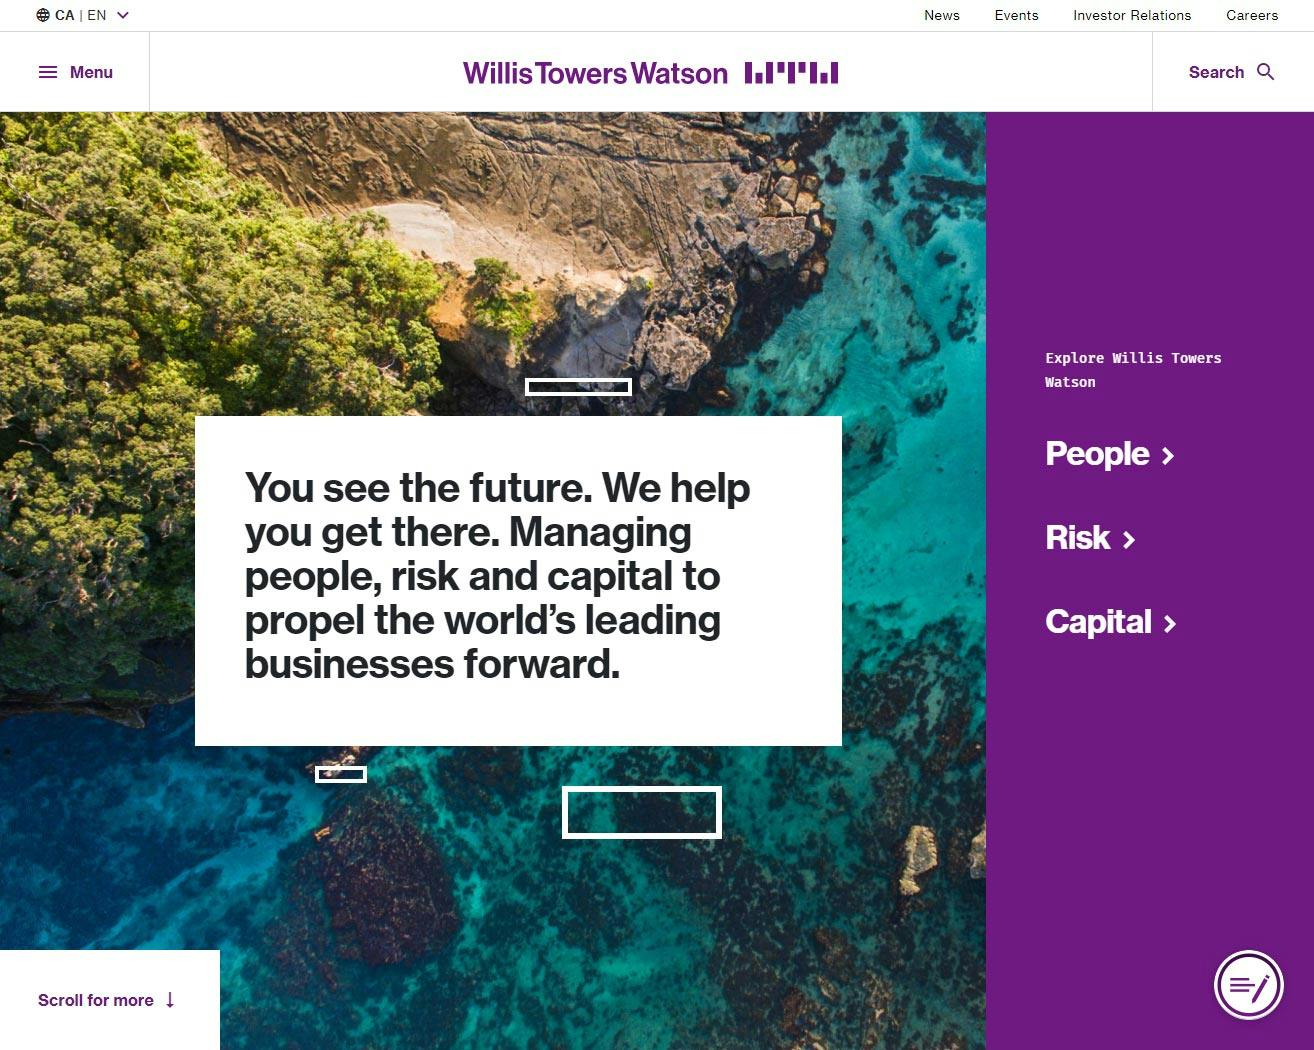 Screenshot showing the Willis Towers Watson website.